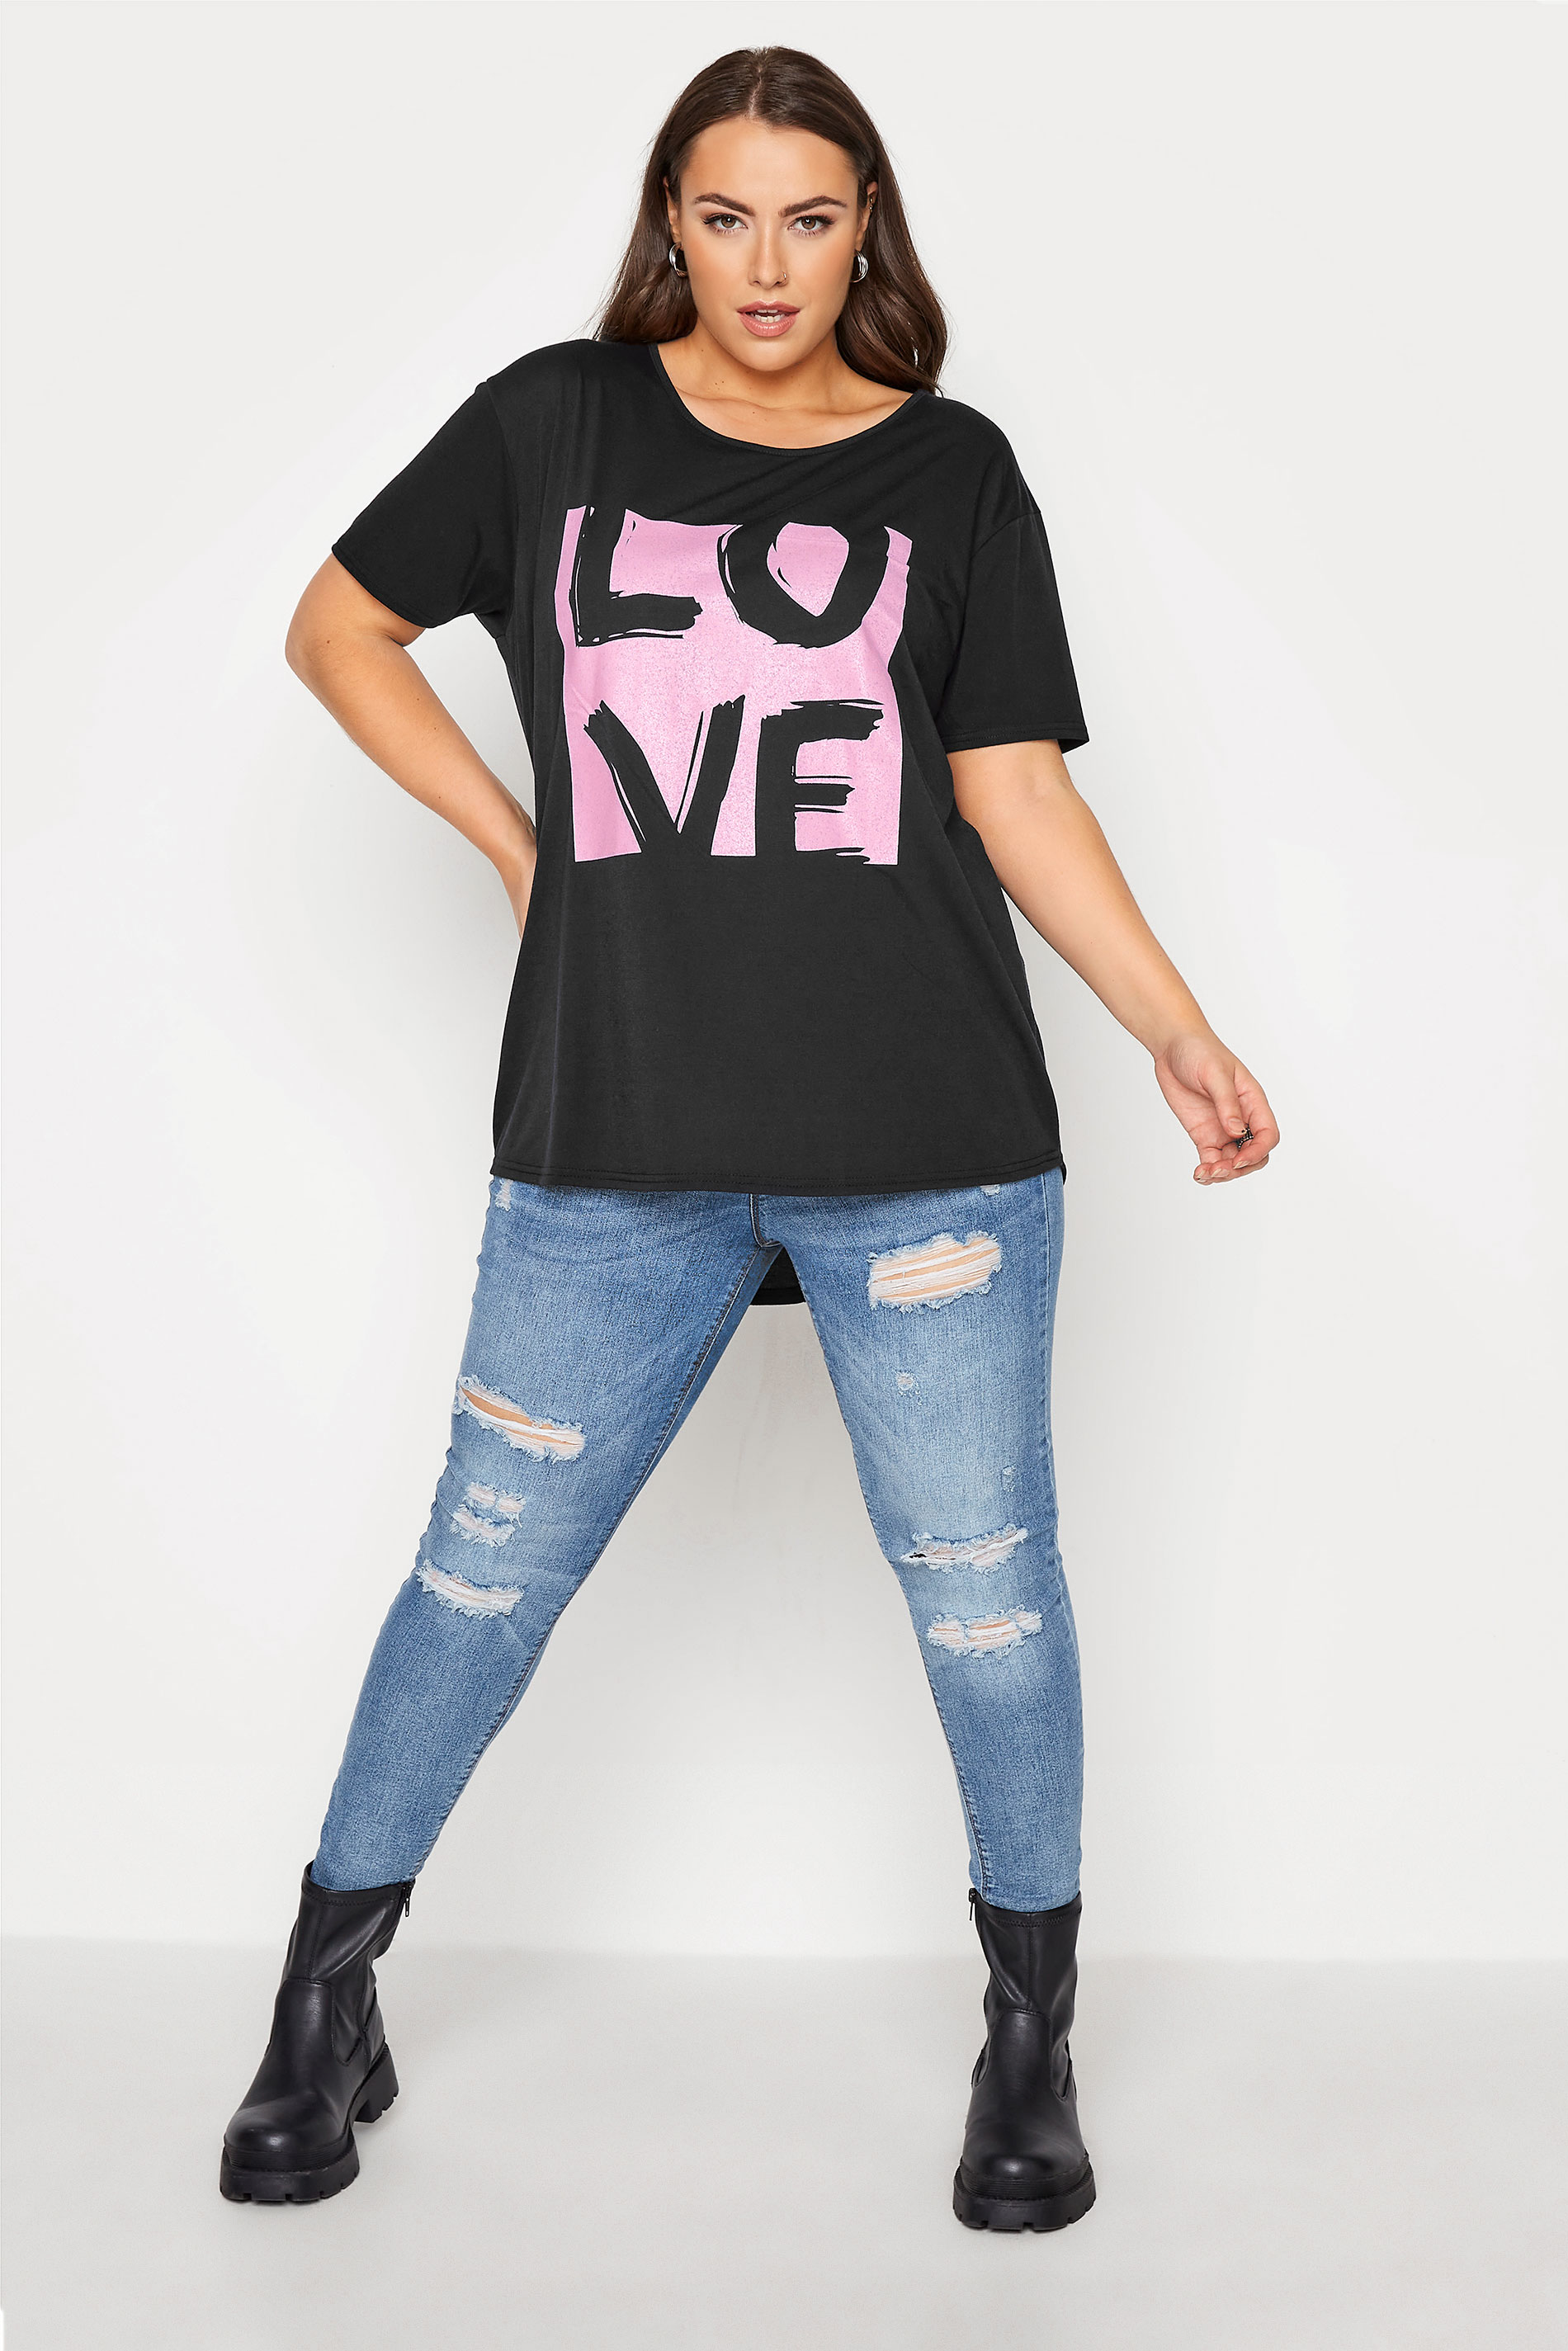 Grande taille  Tops Grande taille  Tops Casual | T-Shirt Noir 'Love' Style Boyfriend - CK73567